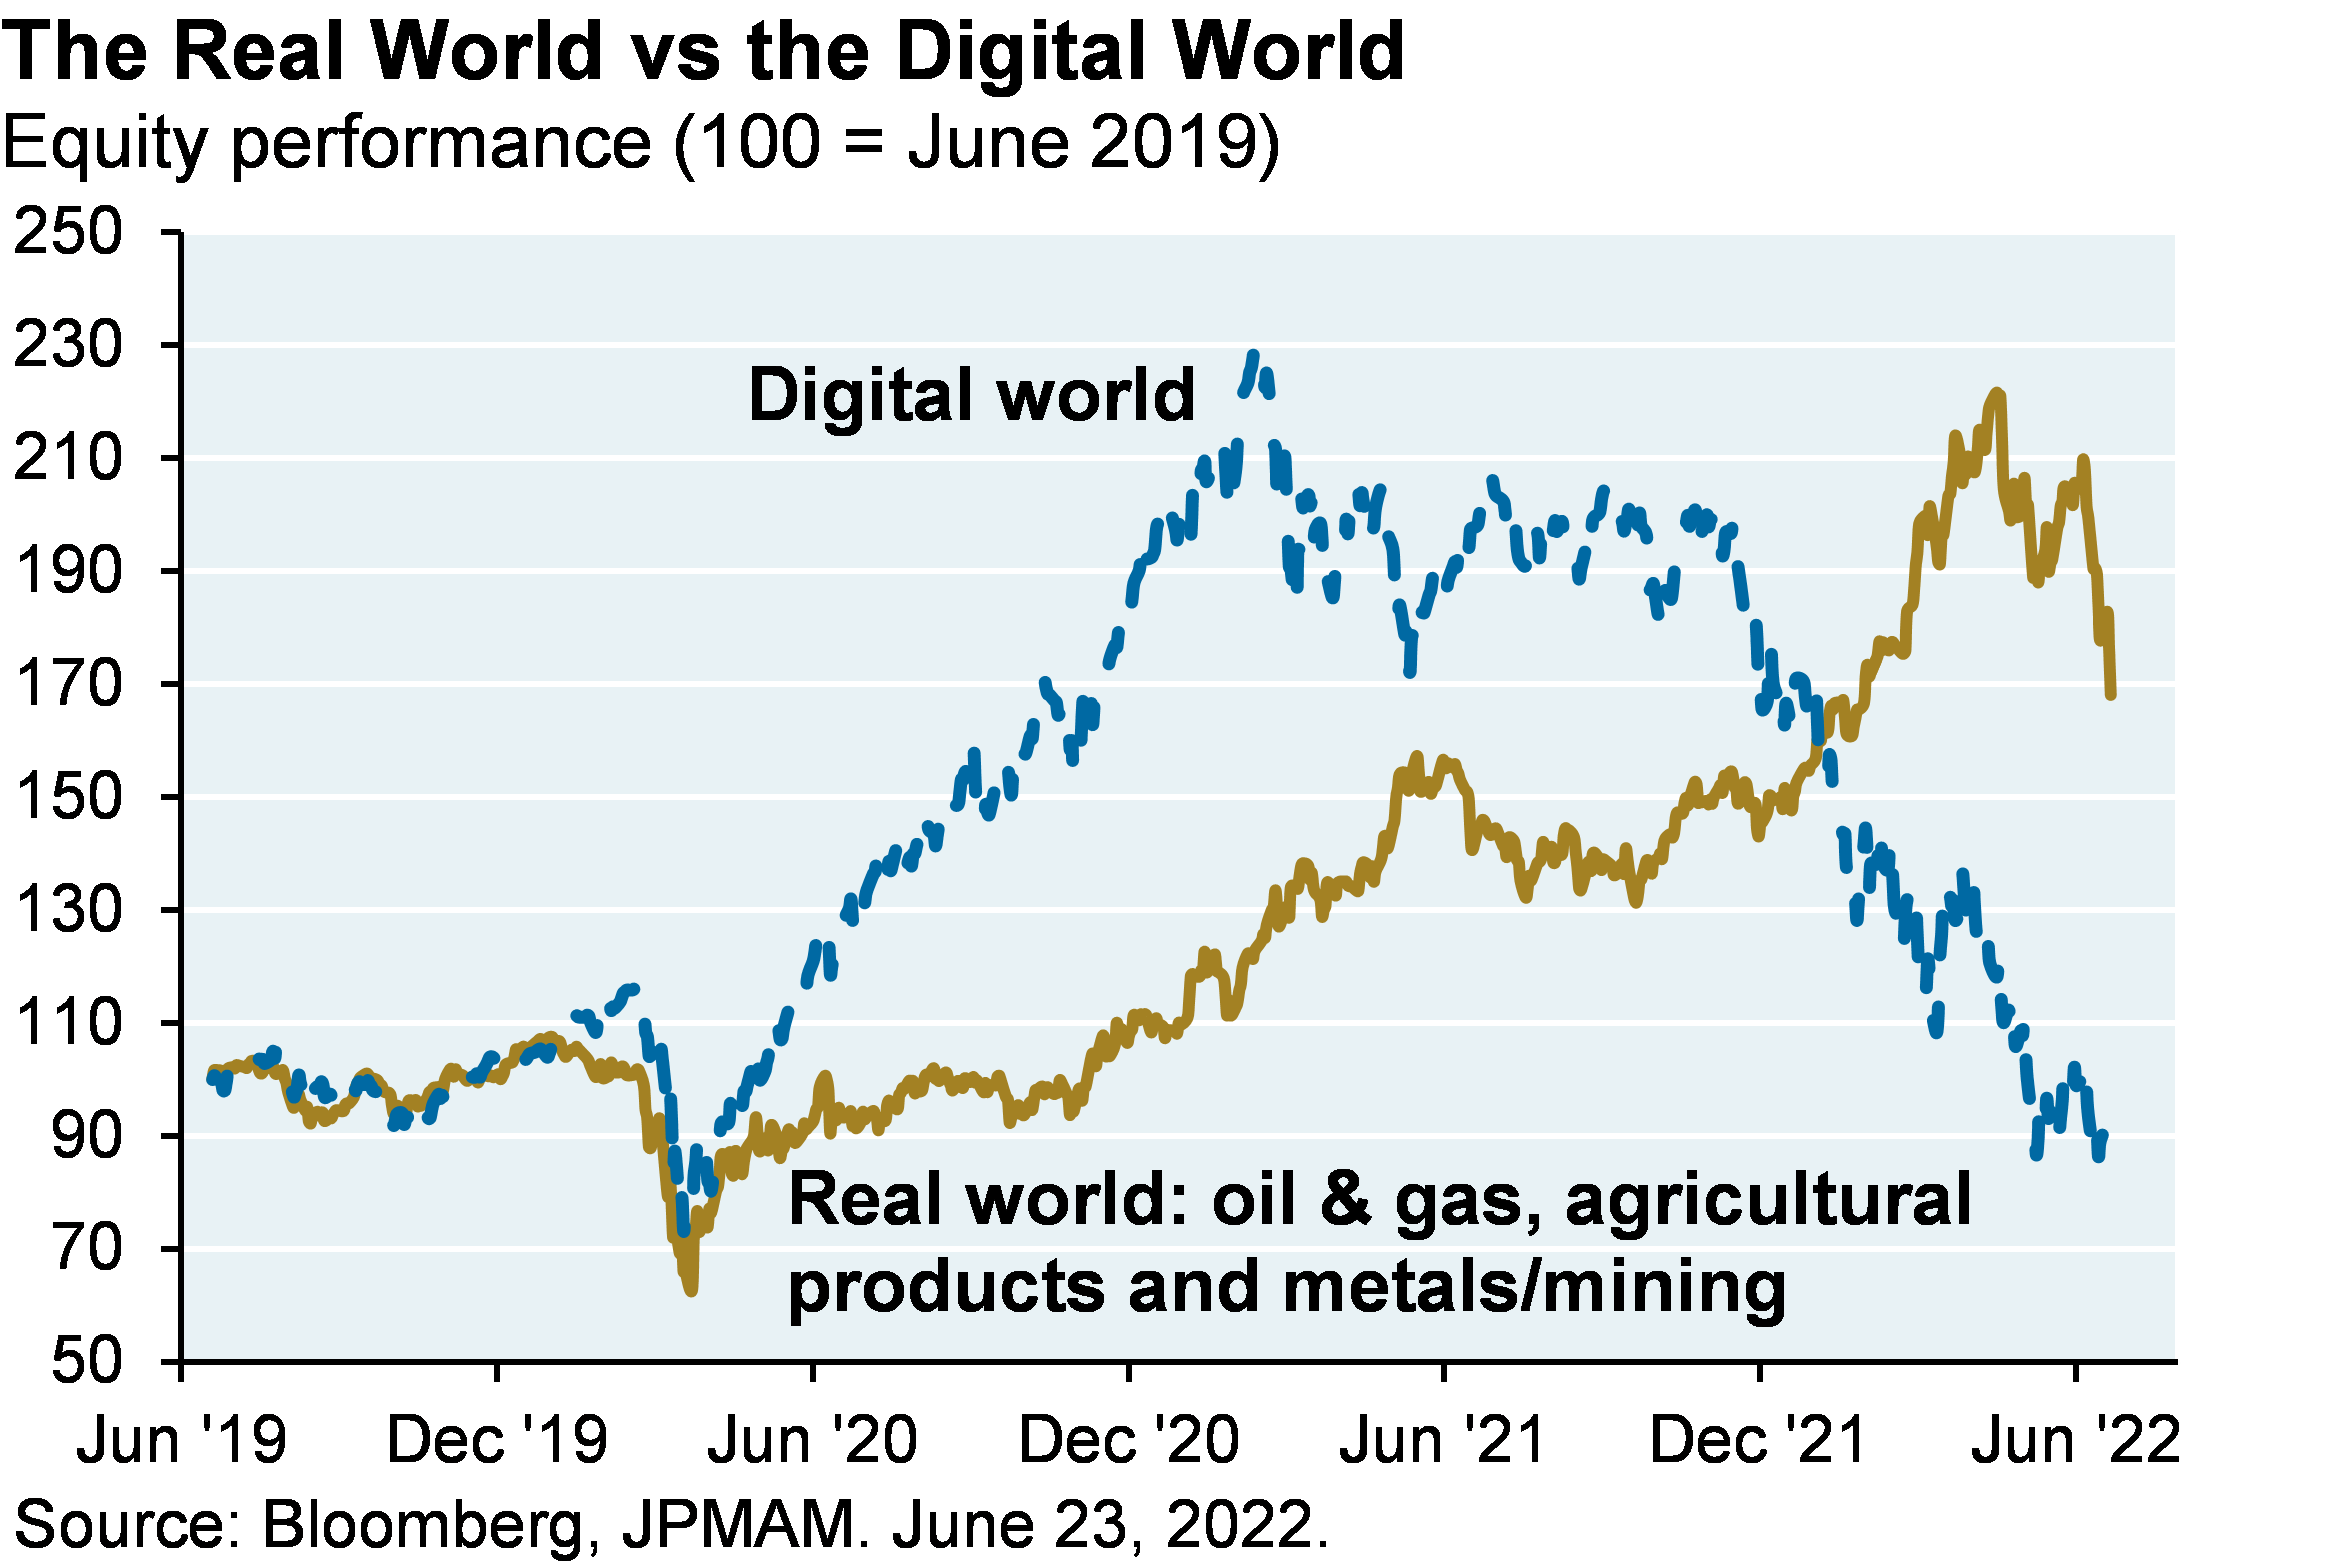 The Real World vs the Digital World